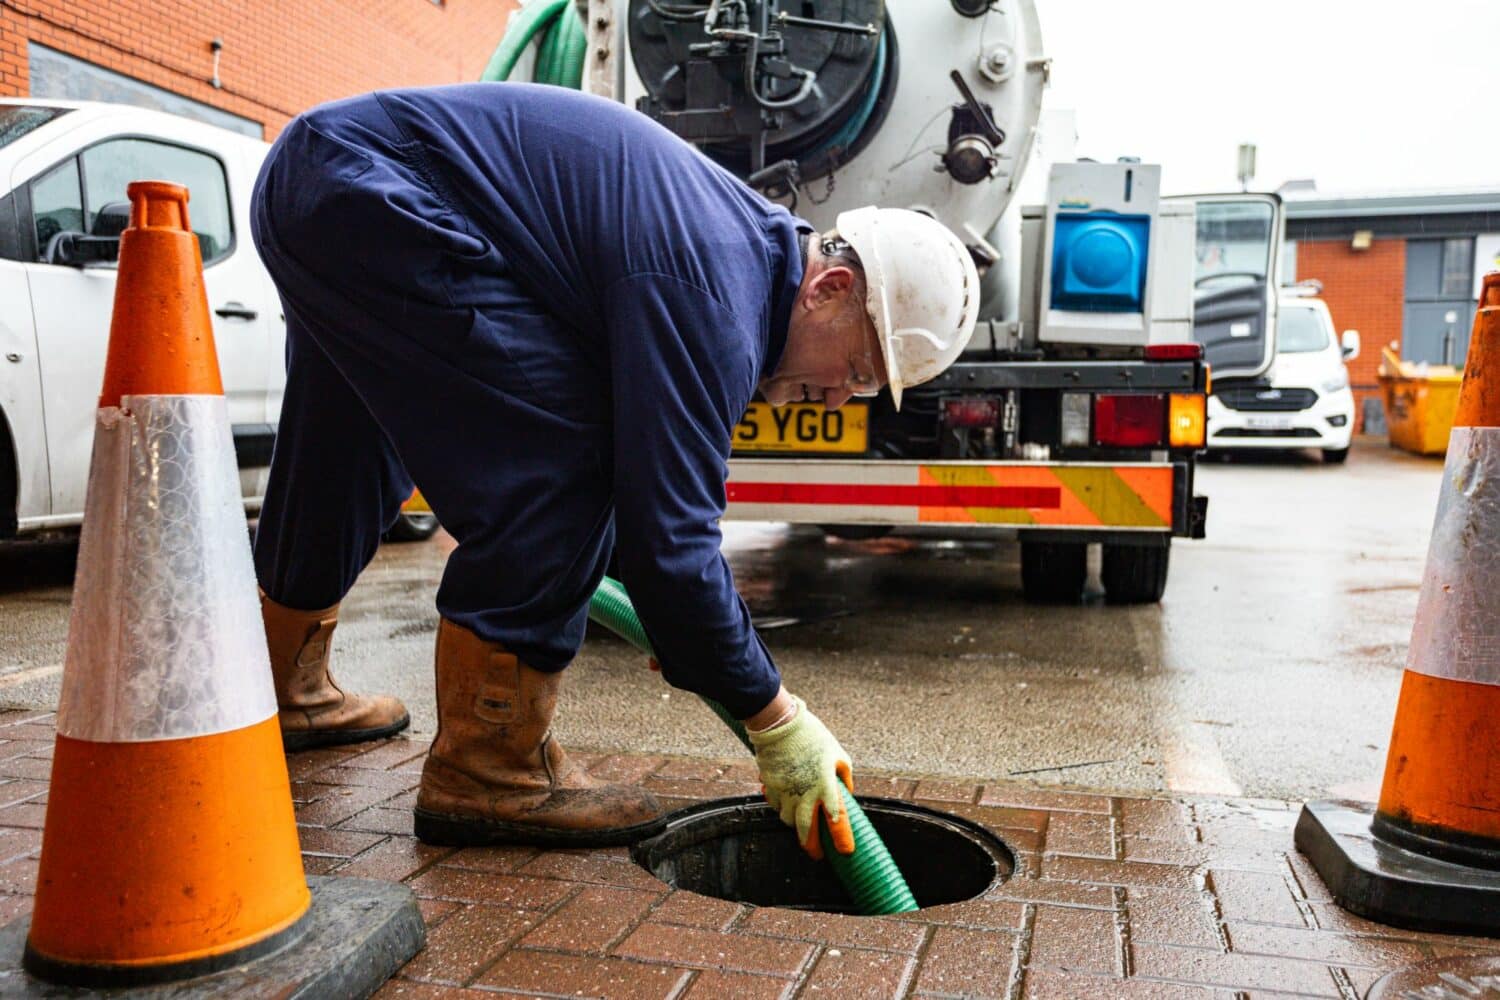 JetVac operator cleaning manhole